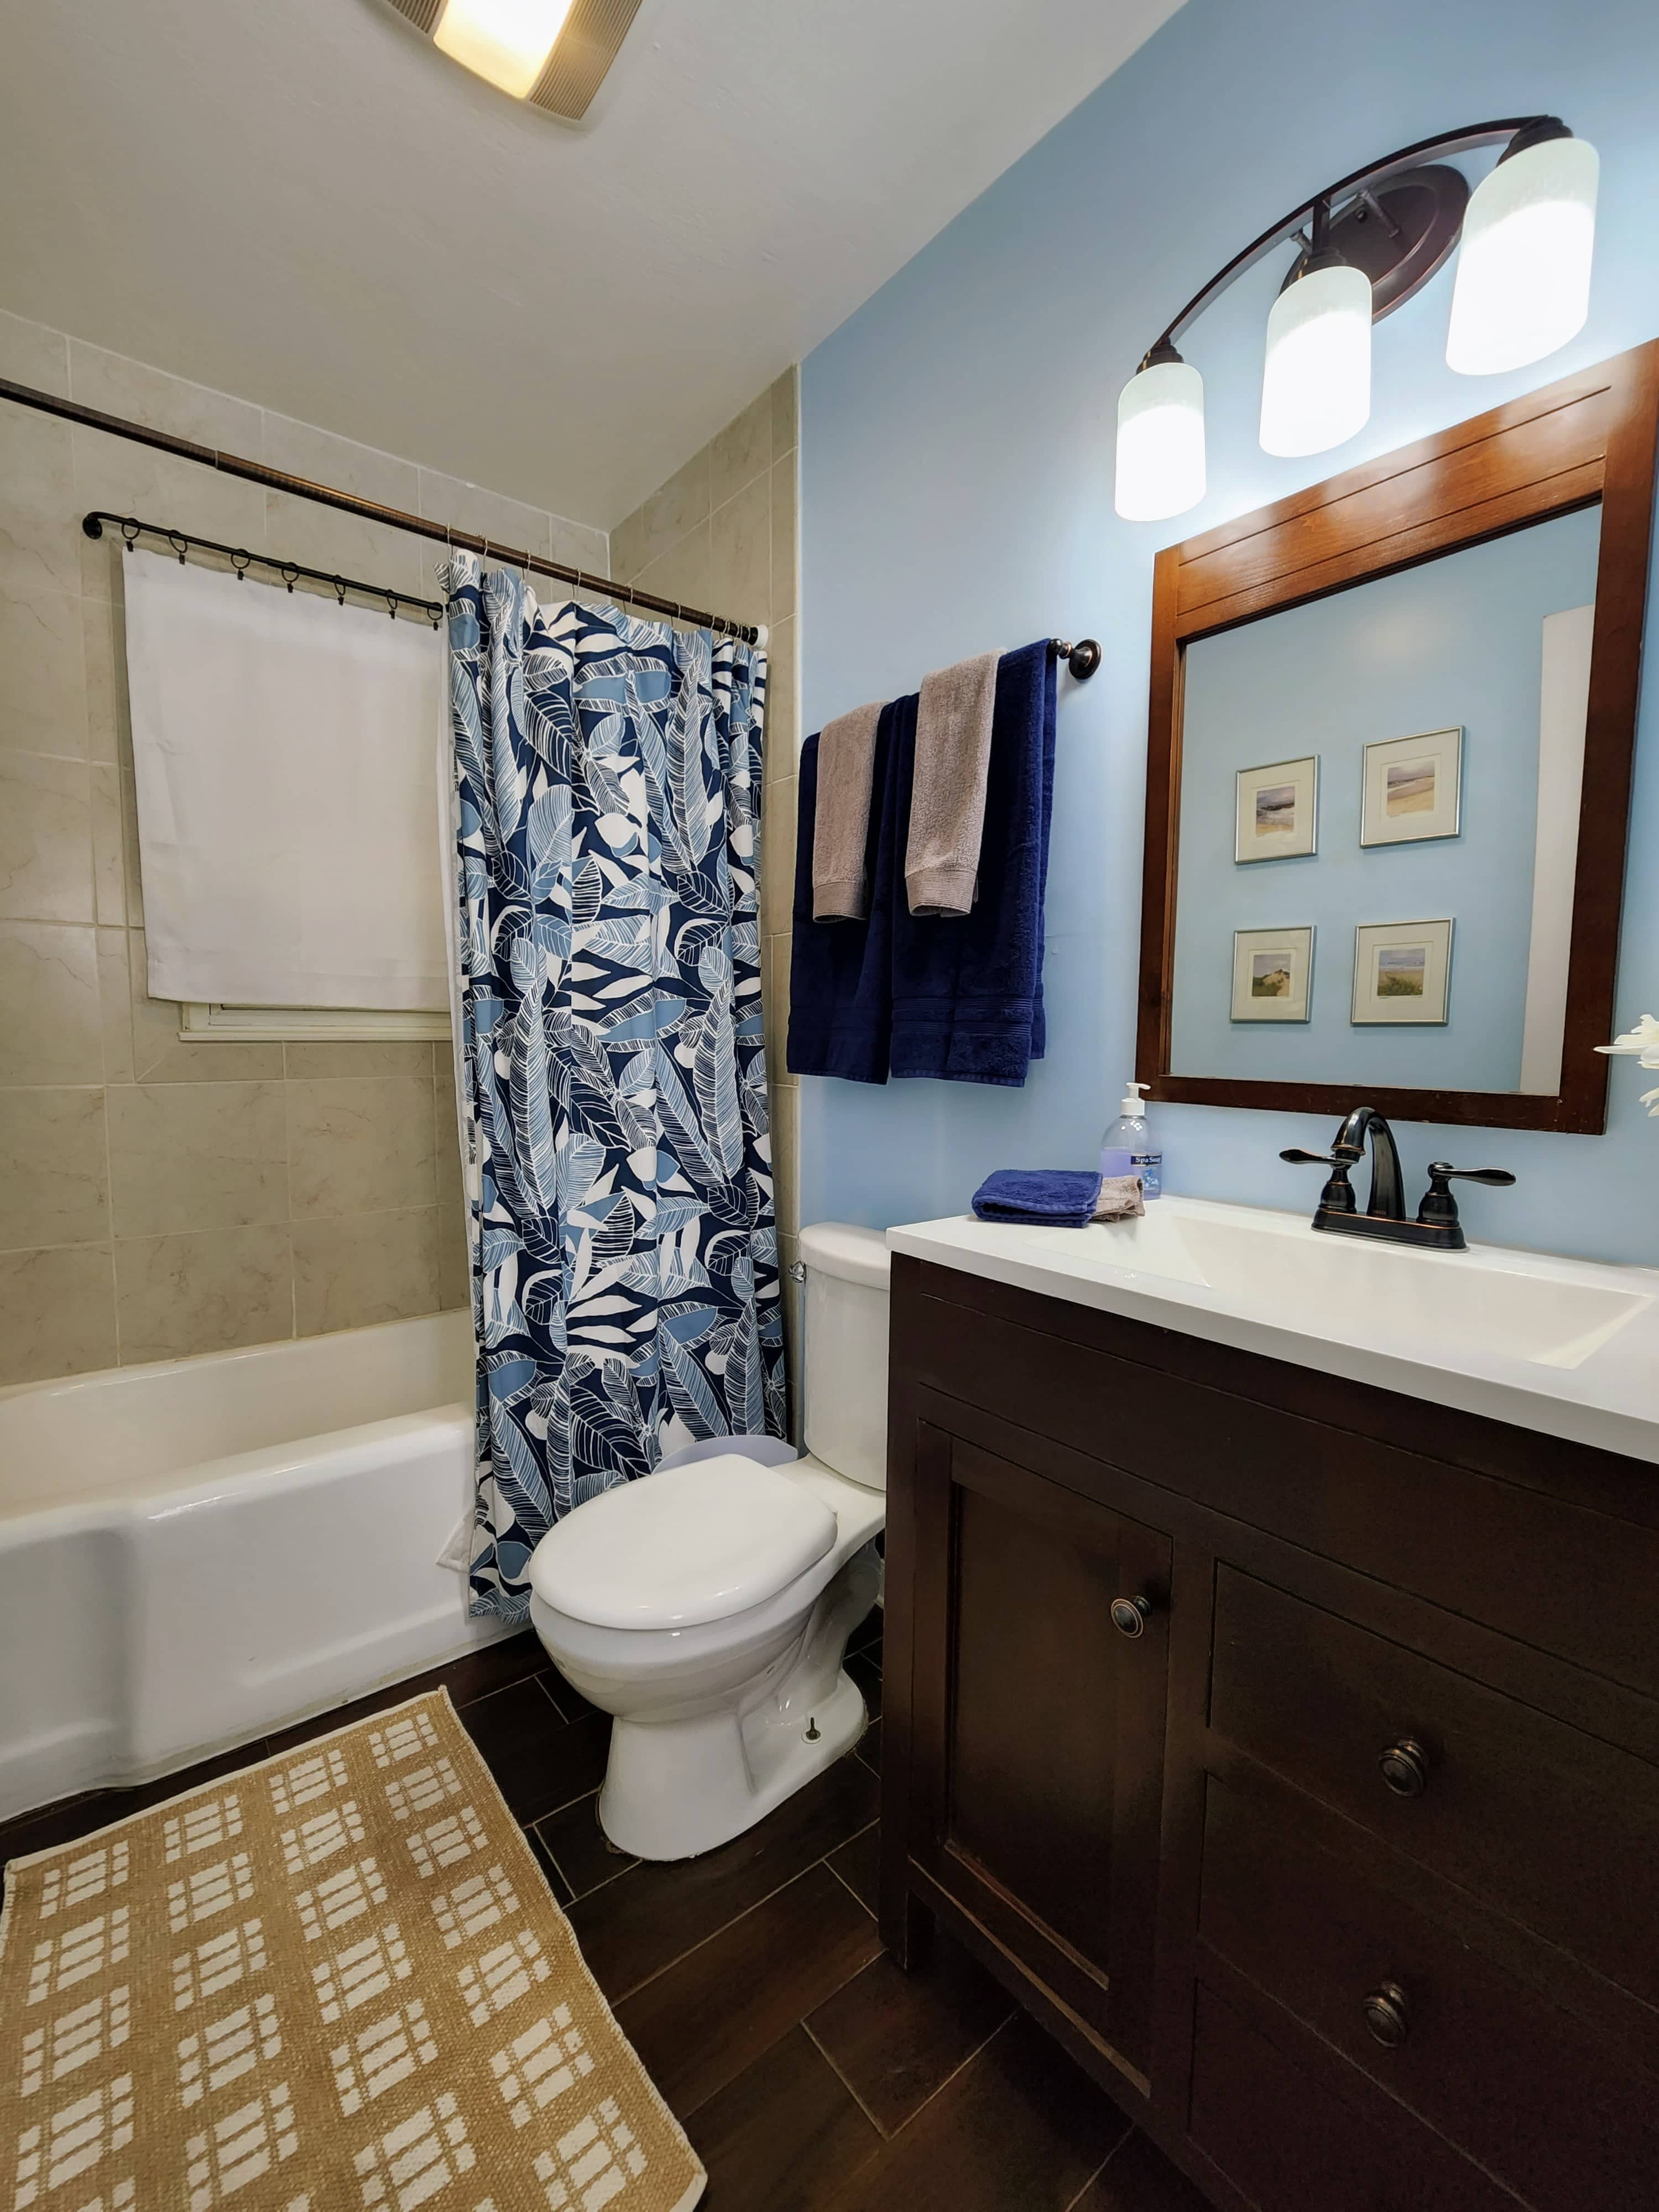 Full bathroom with tub and shower, elegantly designed